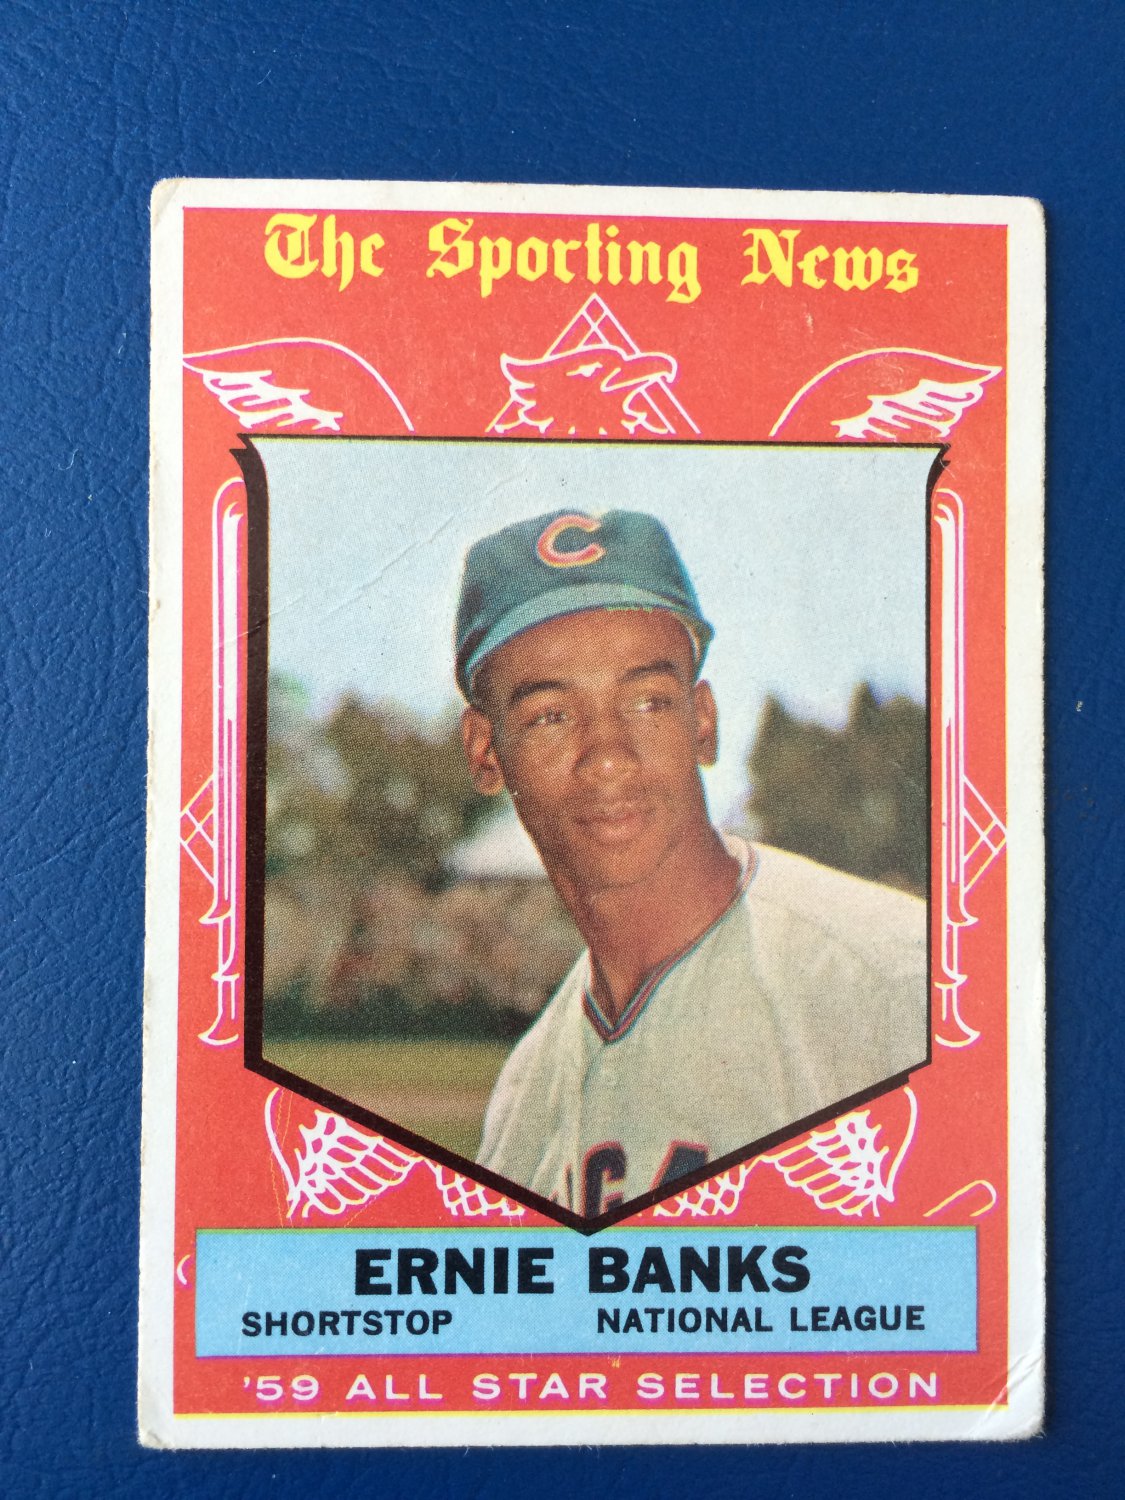 ernie banks baseball card